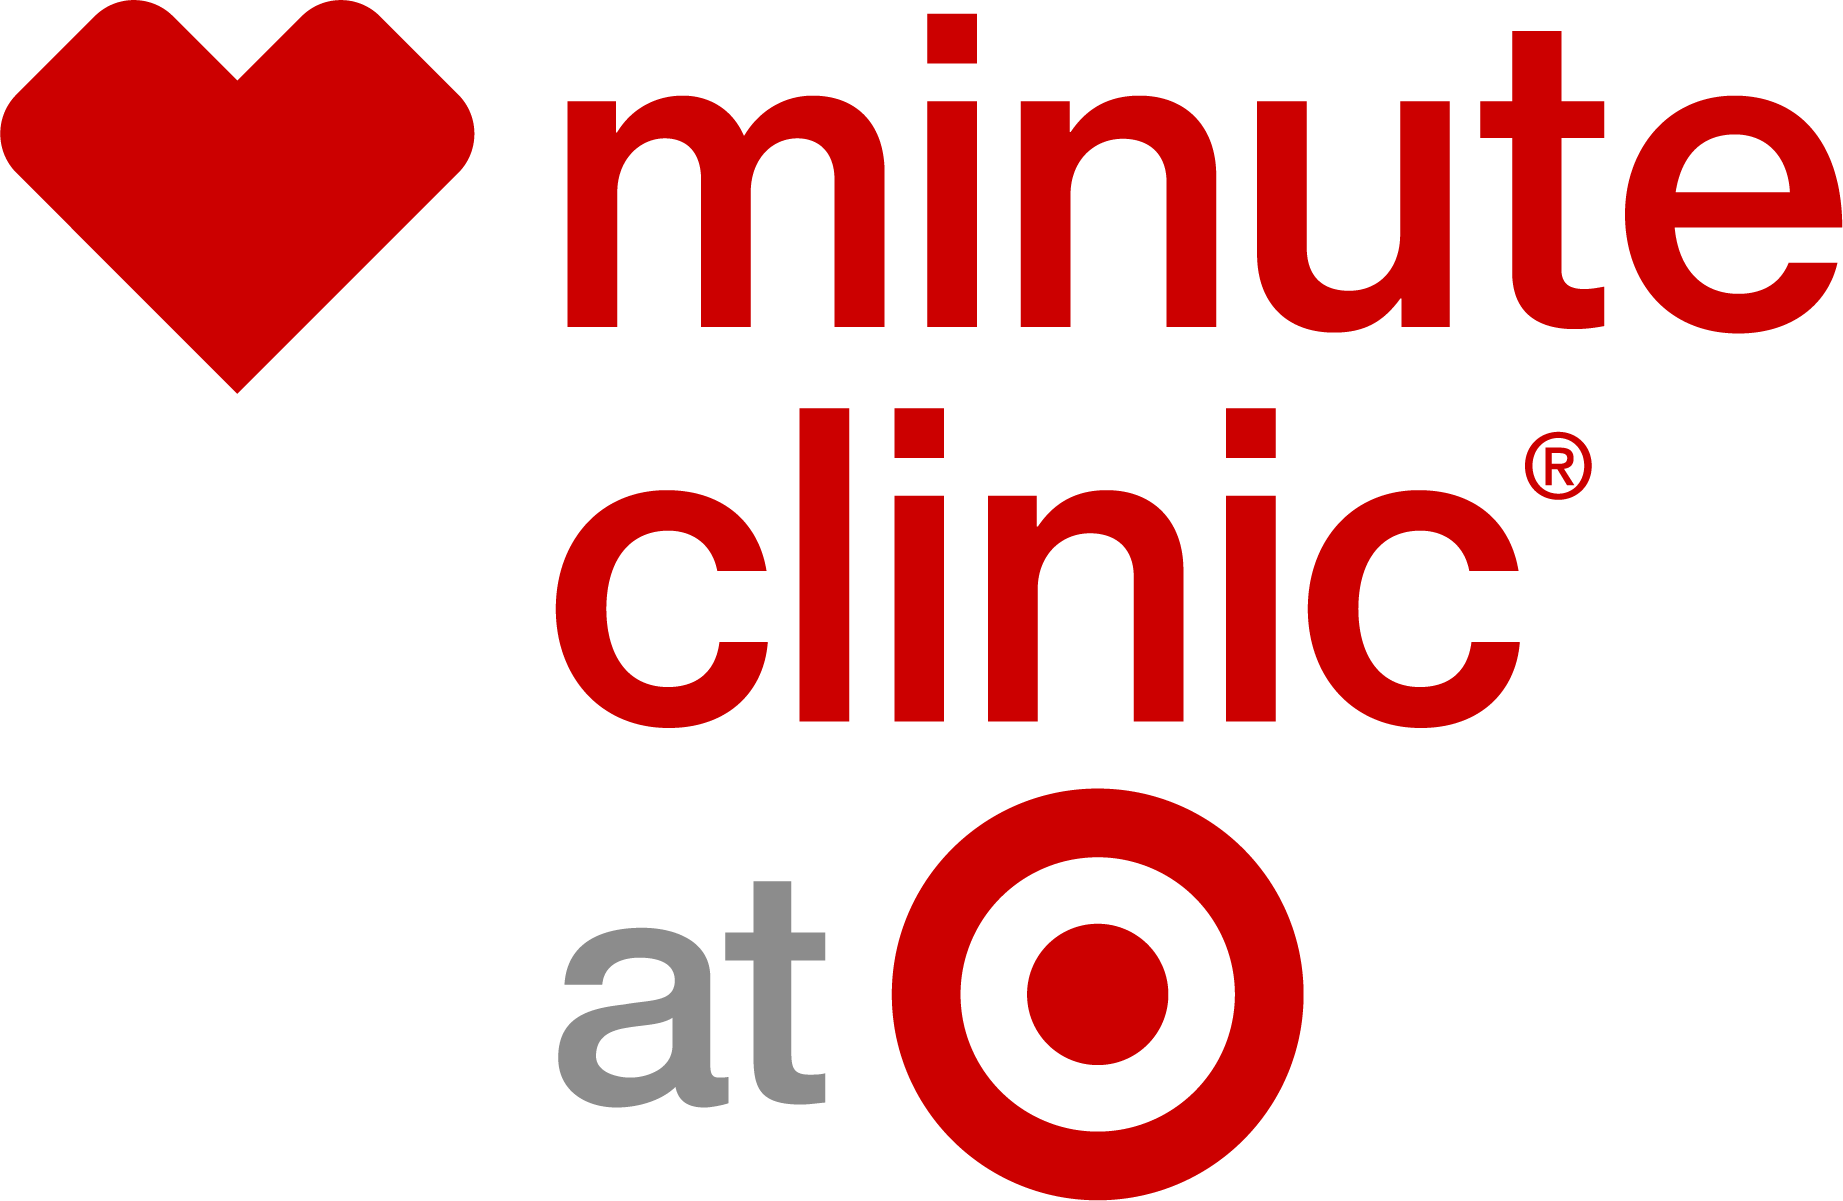 CVS MinuteClinic at Target logo stacked